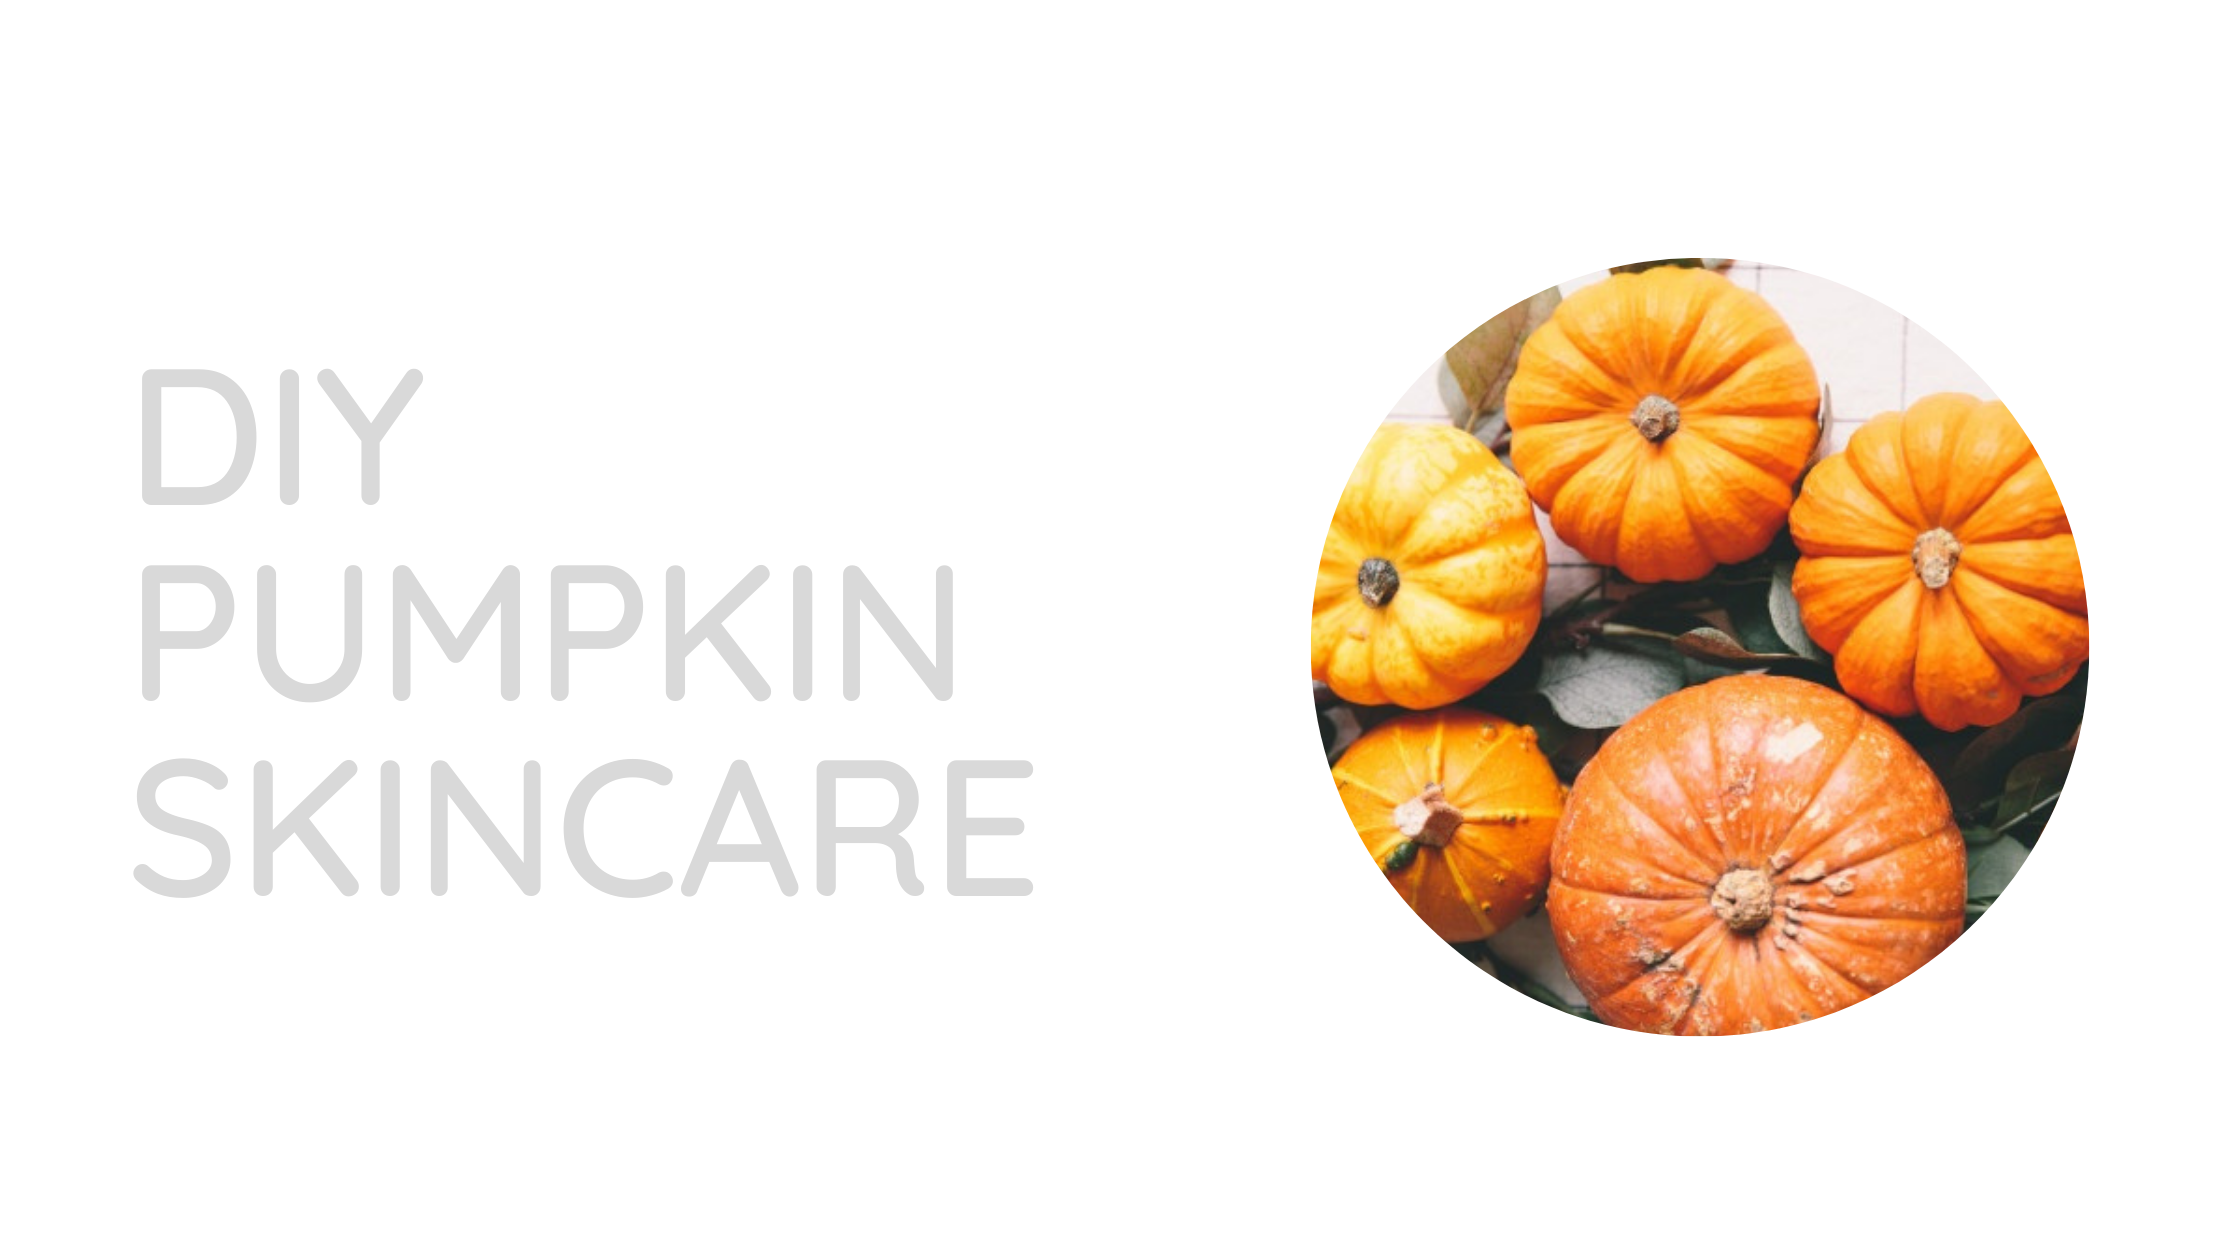 DIY pumpkin skincare for Autumn 